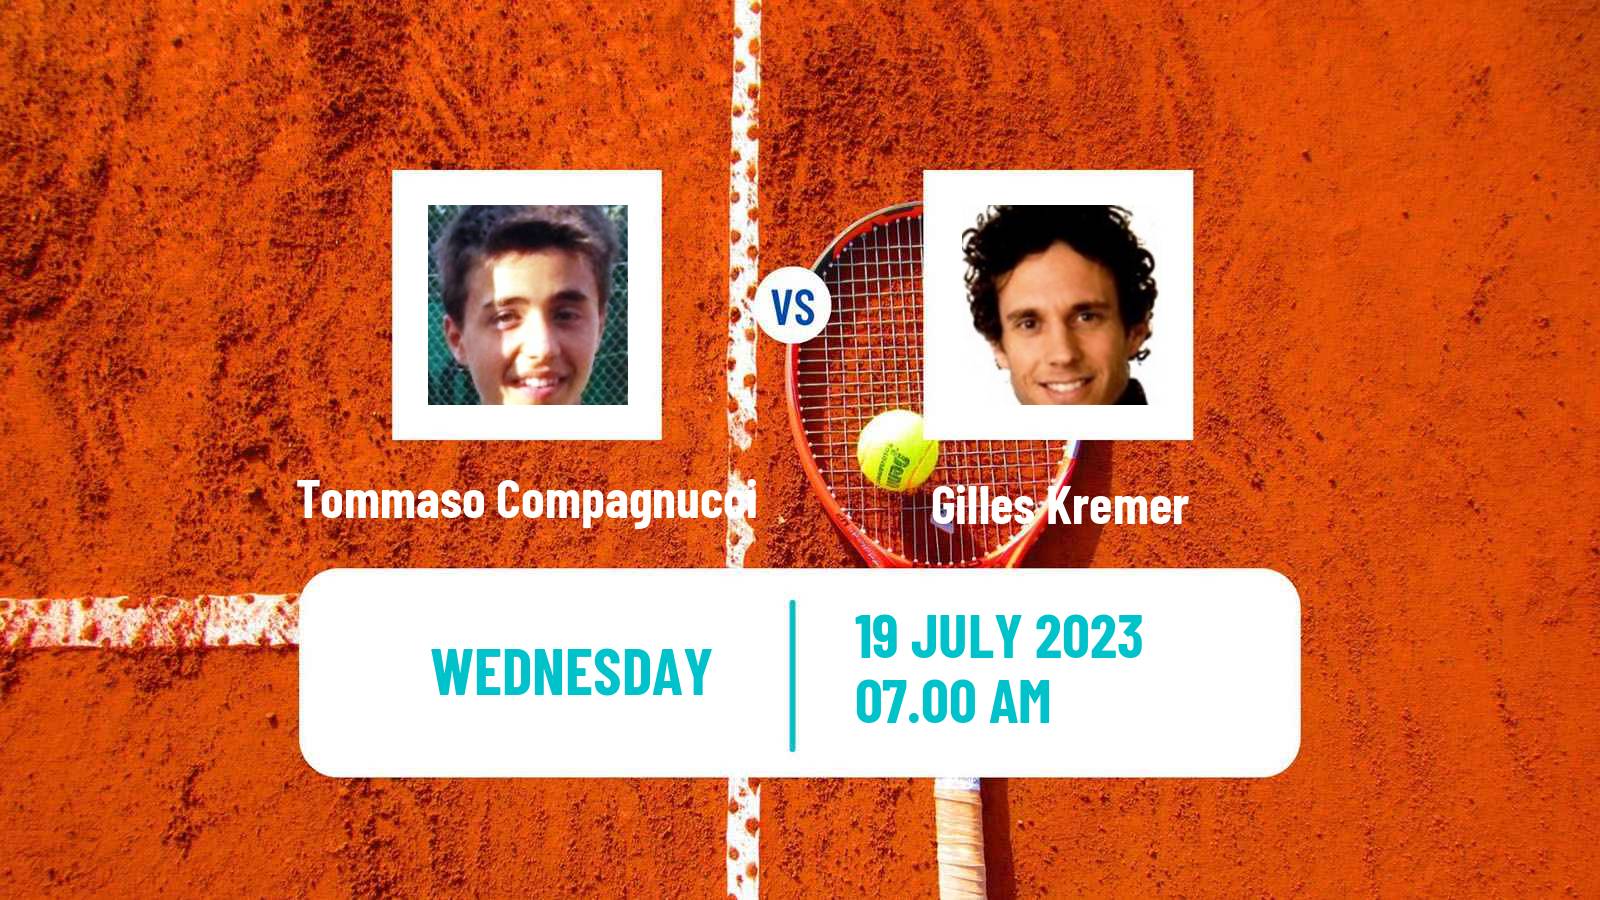 Tennis ITF M25 Esch Alzette 2 Men Tommaso Compagnucci - Gilles Kremer